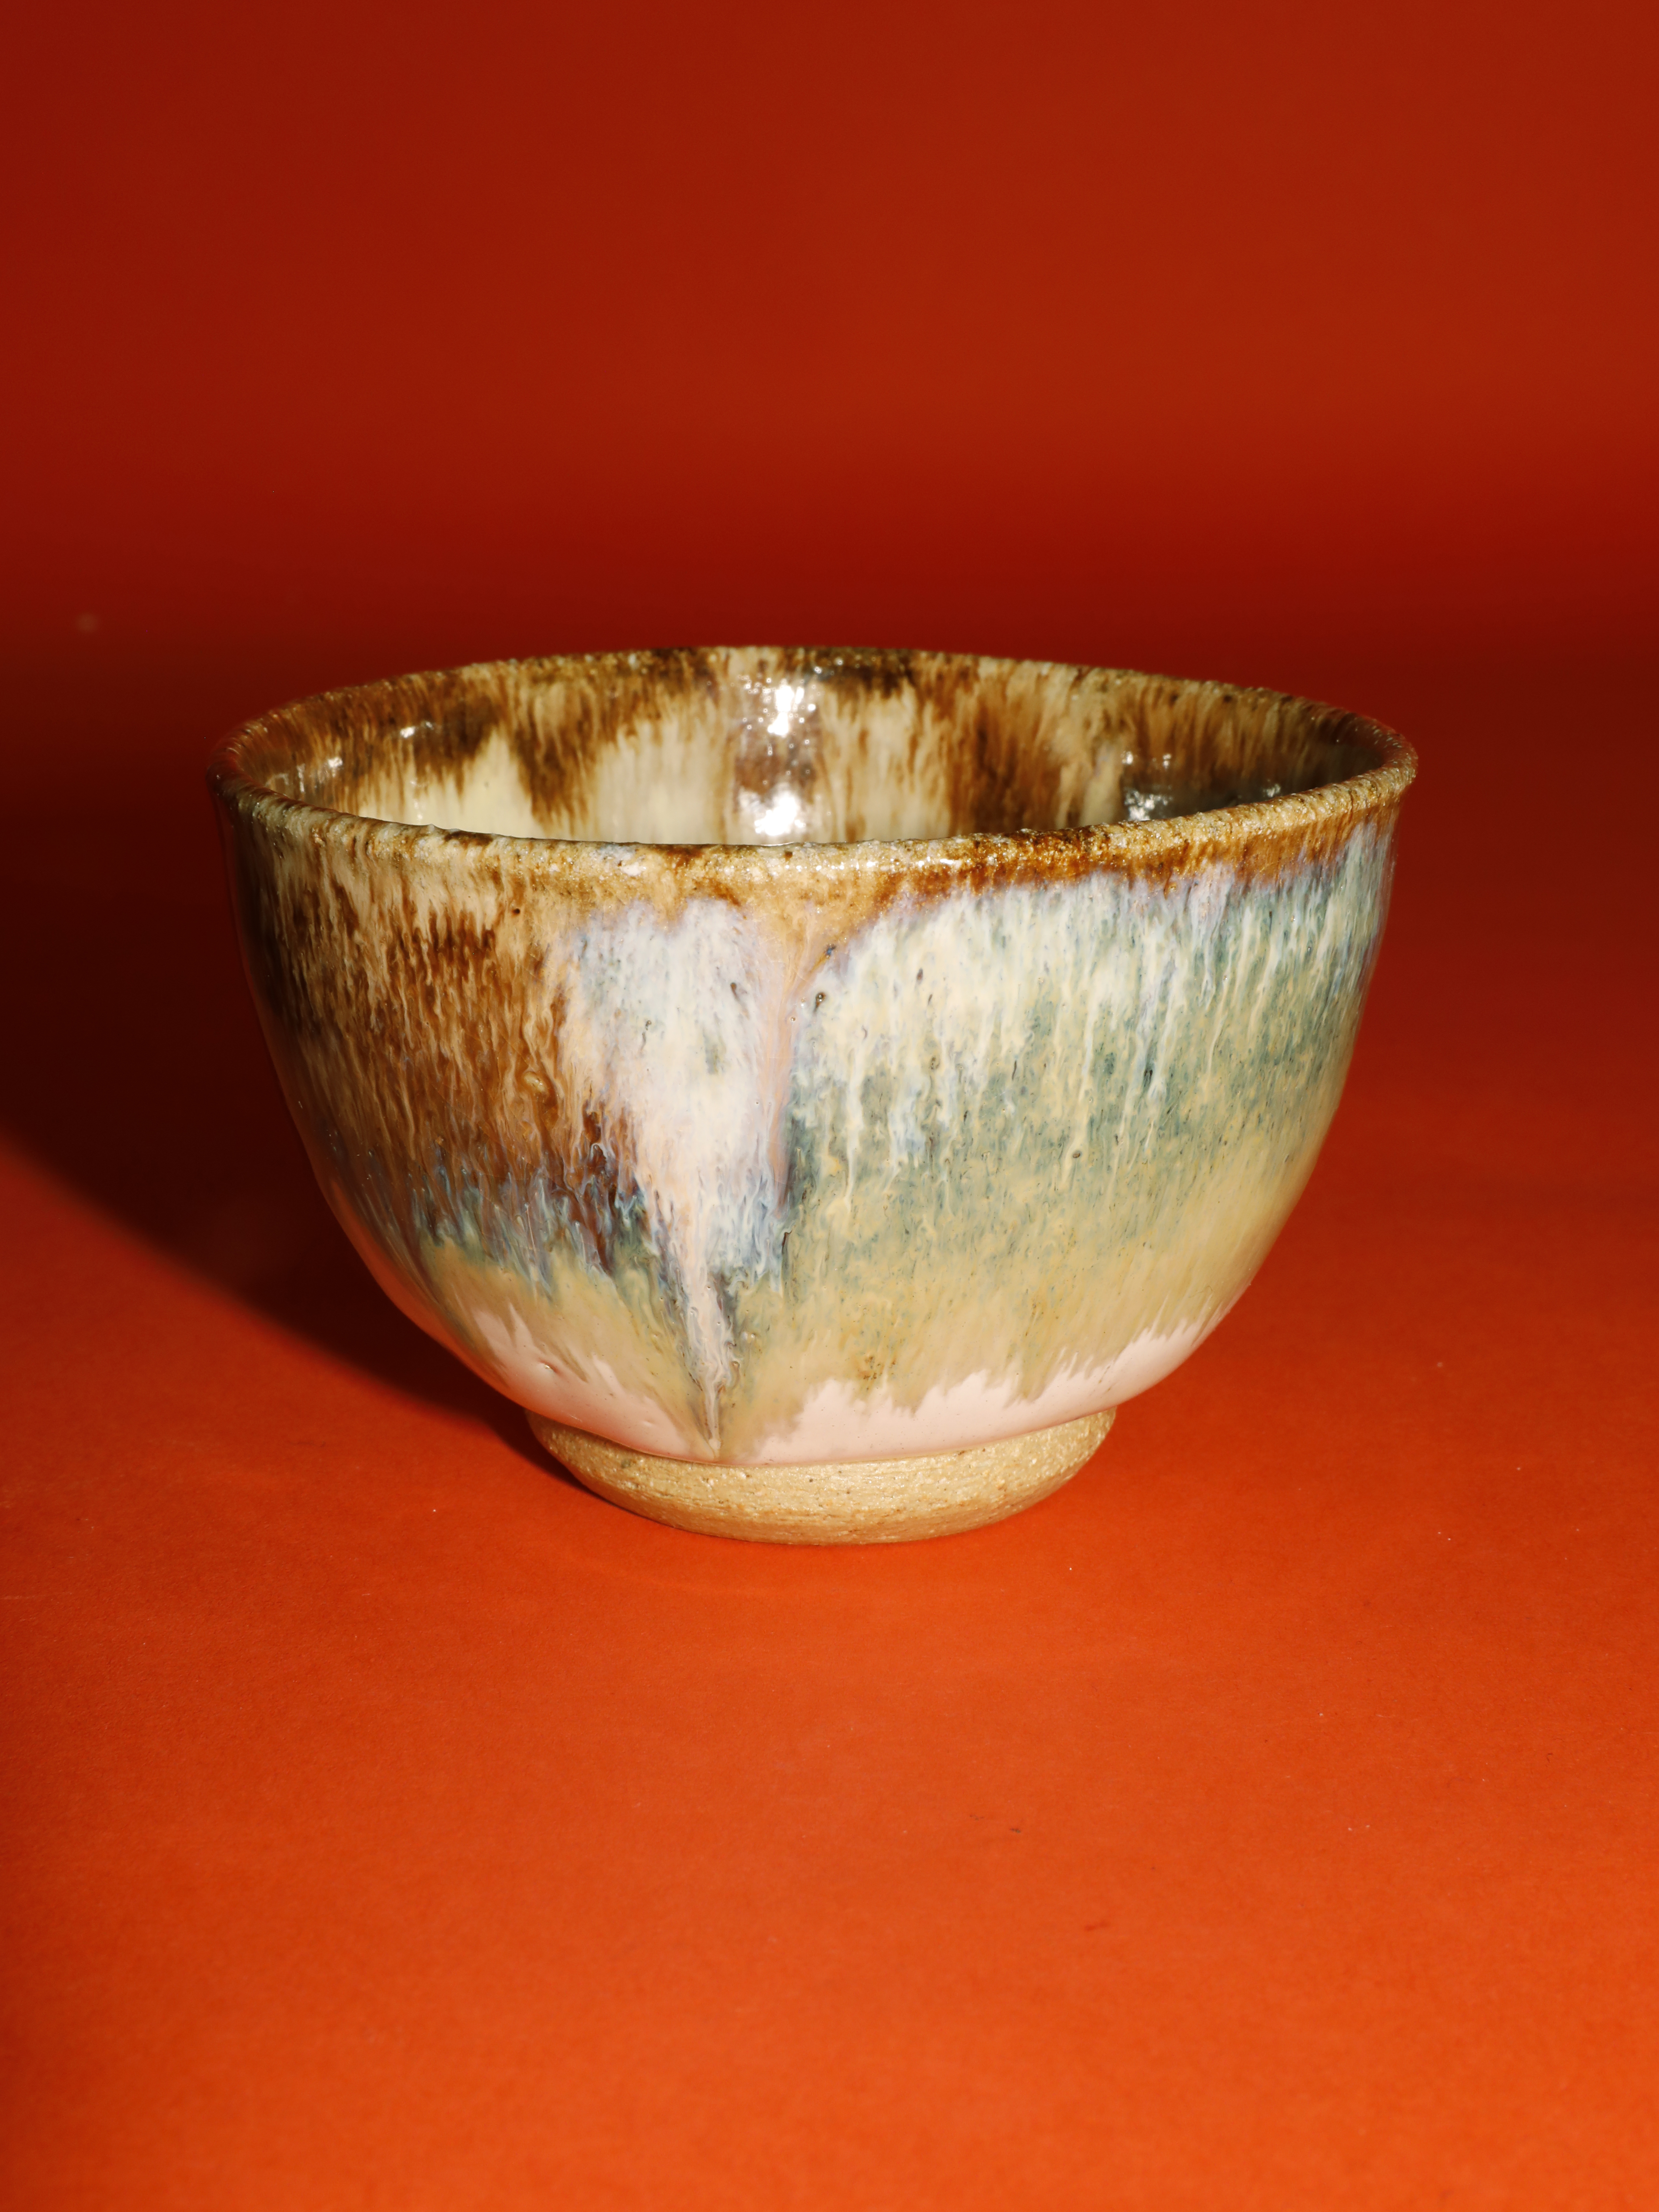 Ovelia Transtoto - 'Glazed bowl' #3